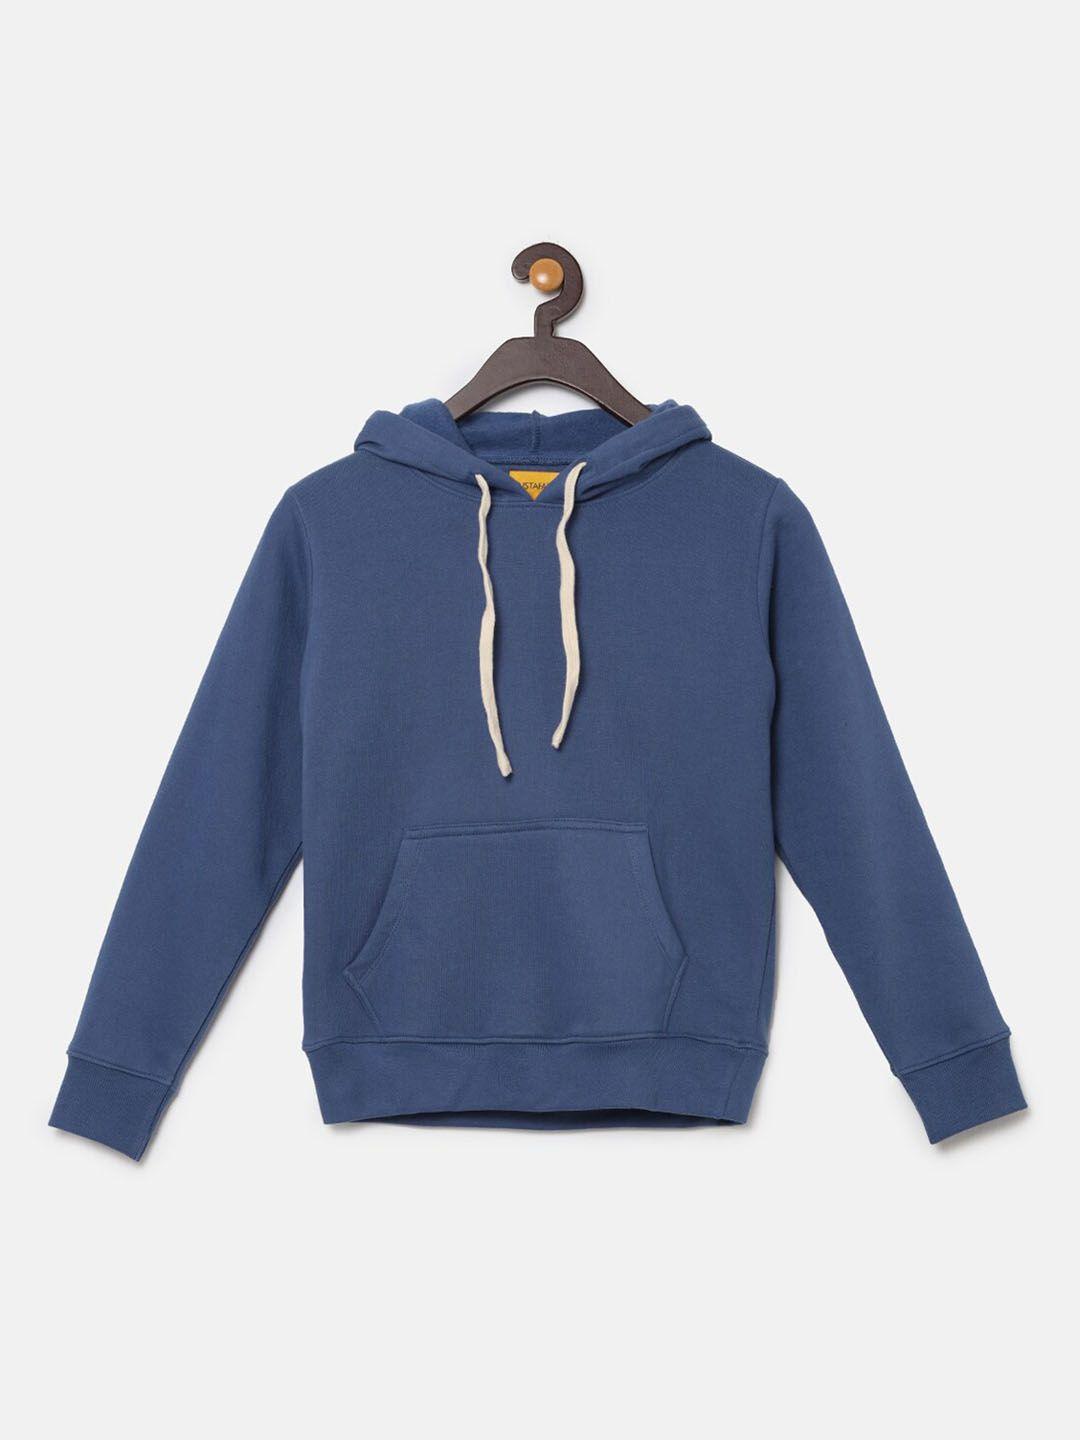 instafab boys blue pure cotton solid hooded pullover sweatshirt